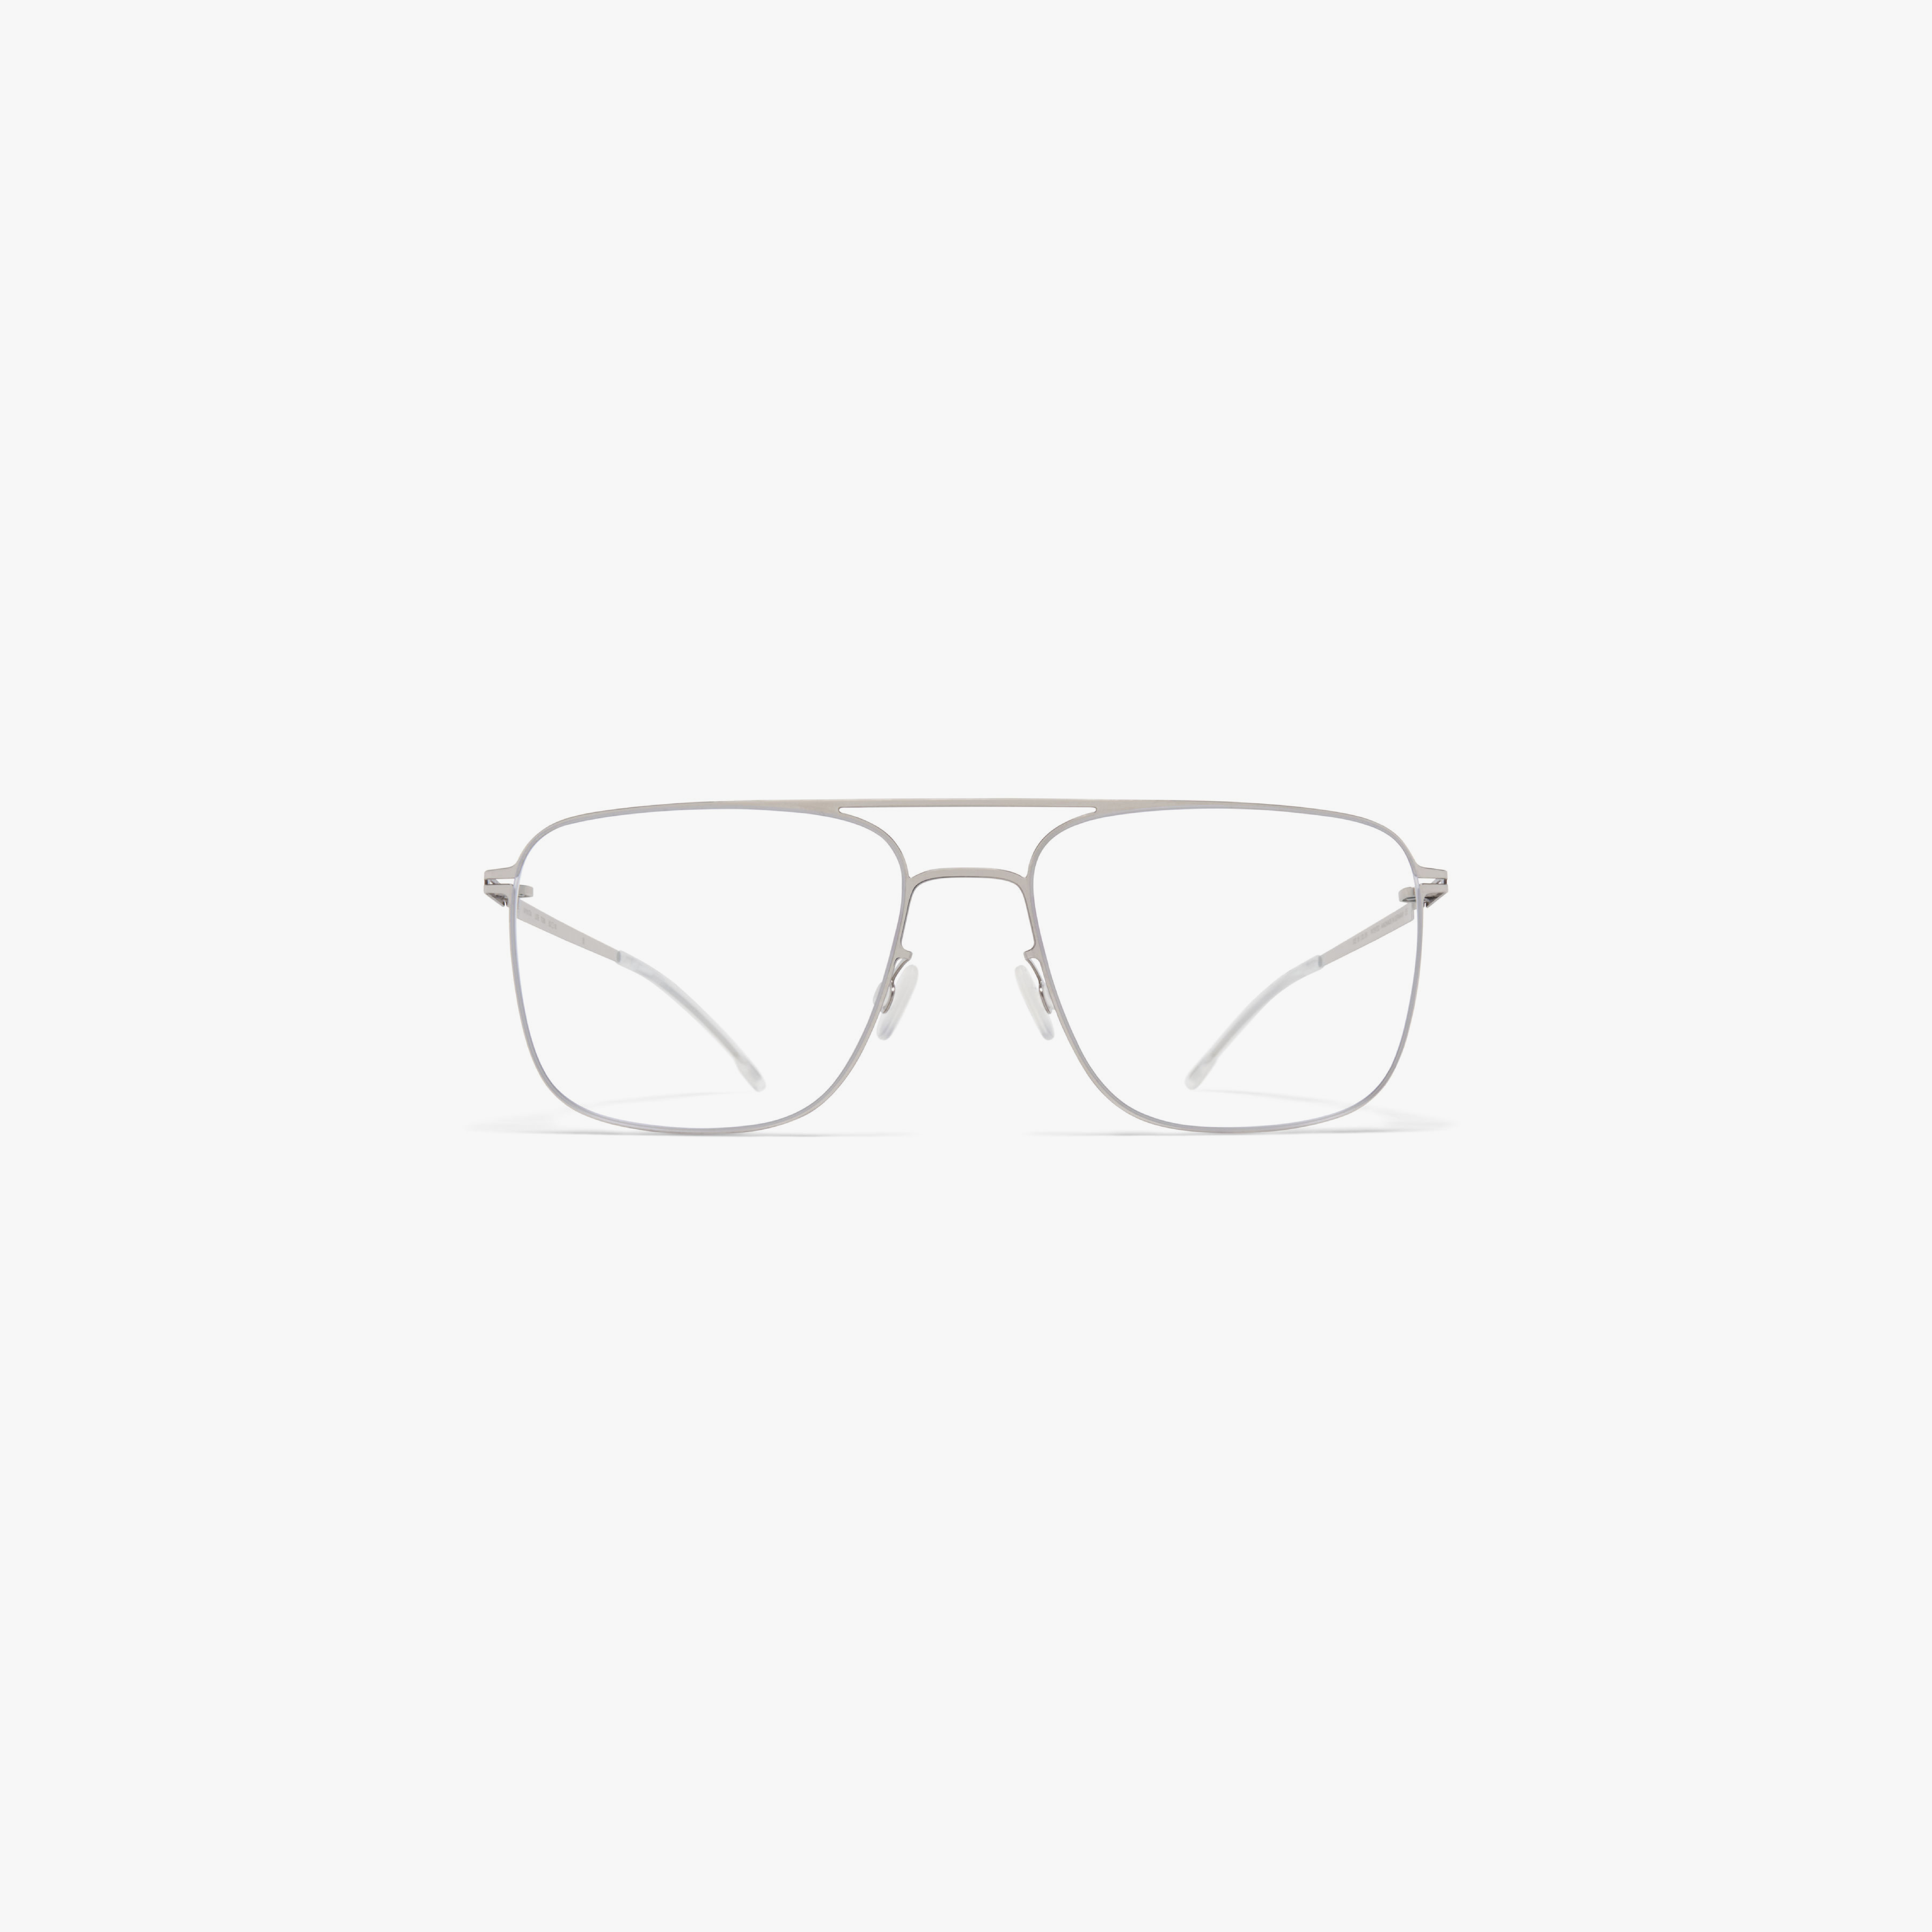 Handmade Sunglasses & Eyeglasses Collections - MYKITA®